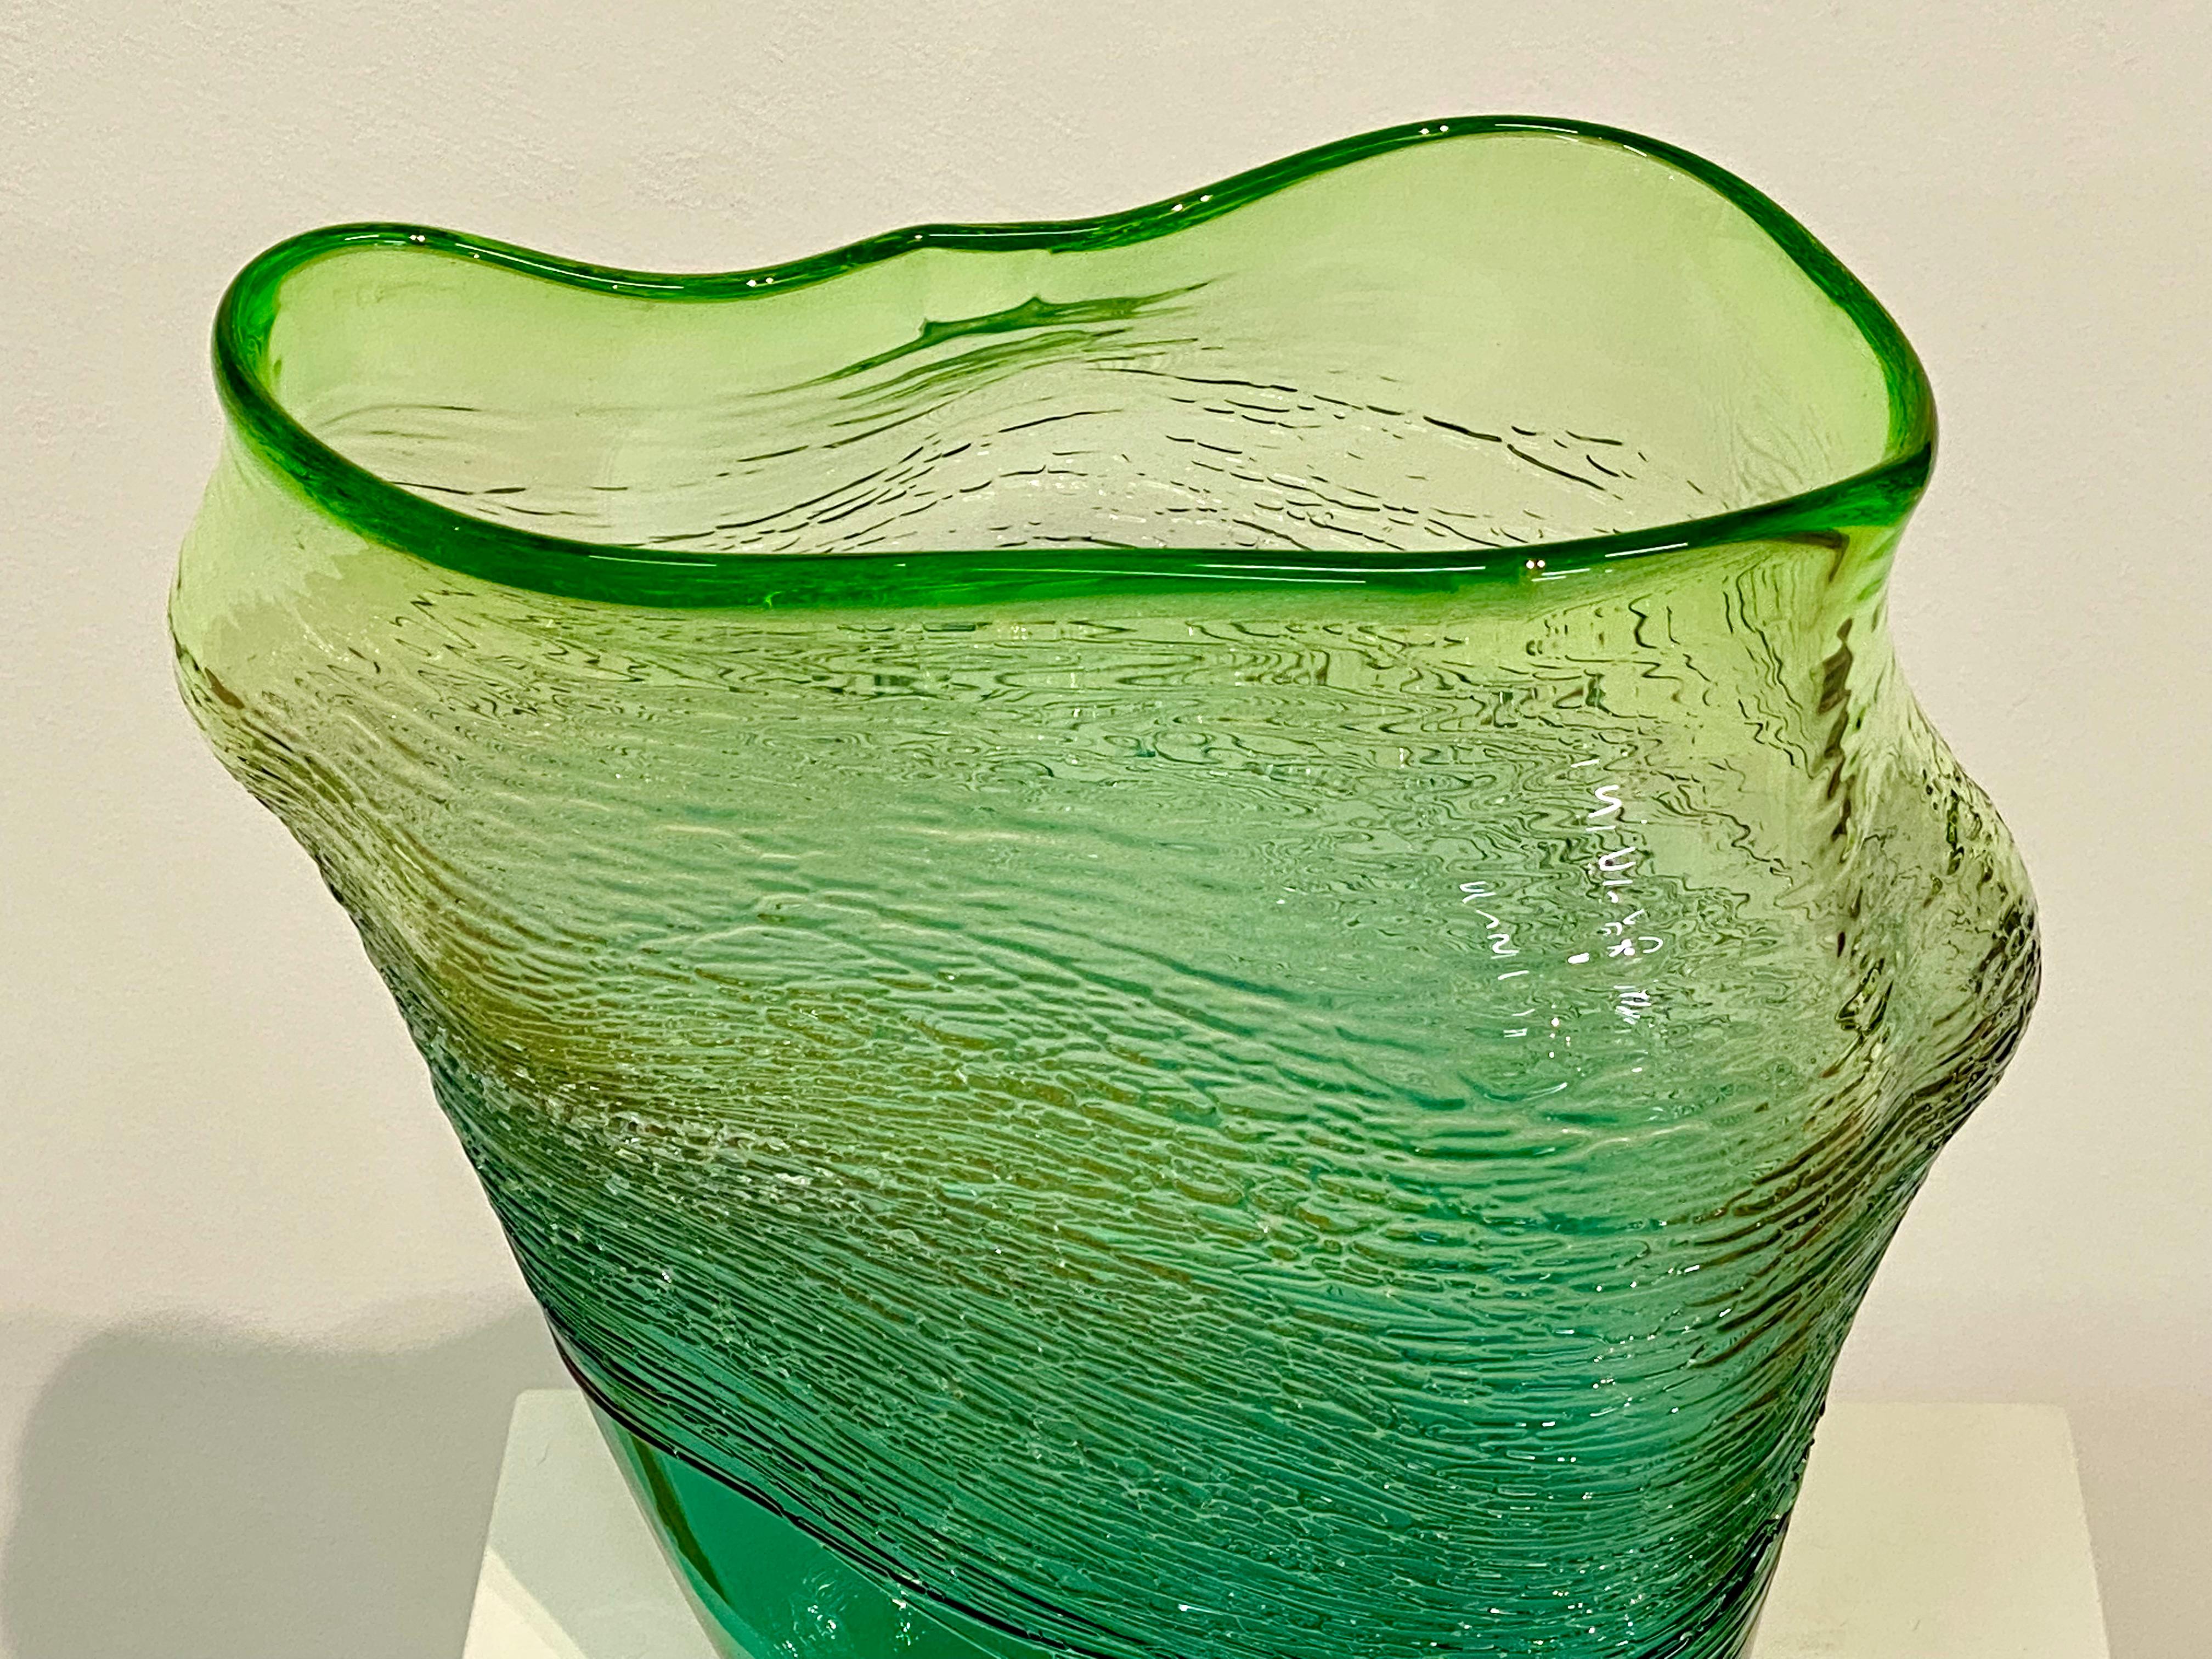 Fluid Form, Green-21st Century Blown Glass Object  - Contemporary Sculpture by Bibi Smit